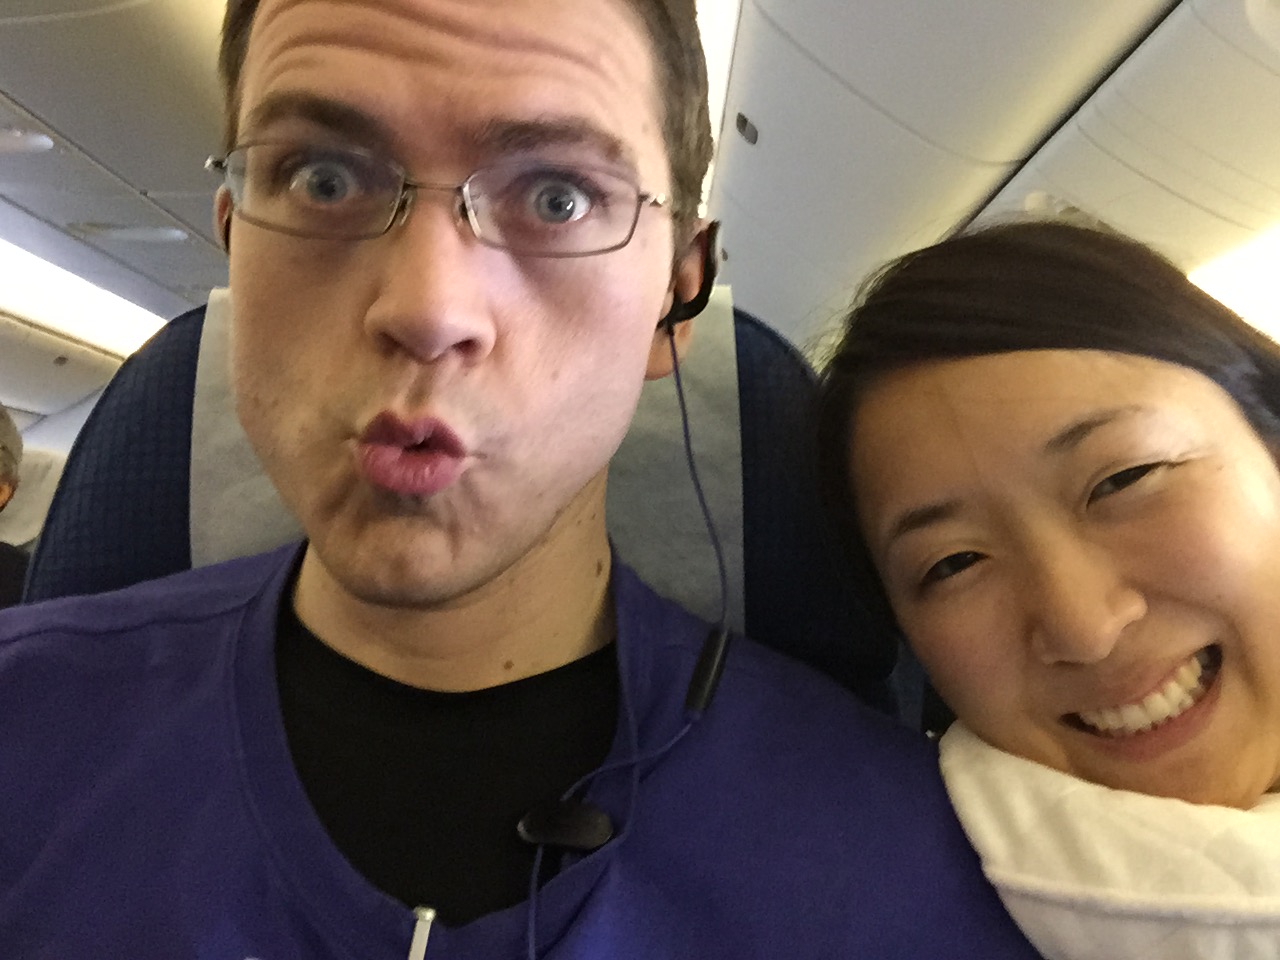 Half way through the flight back to Japan